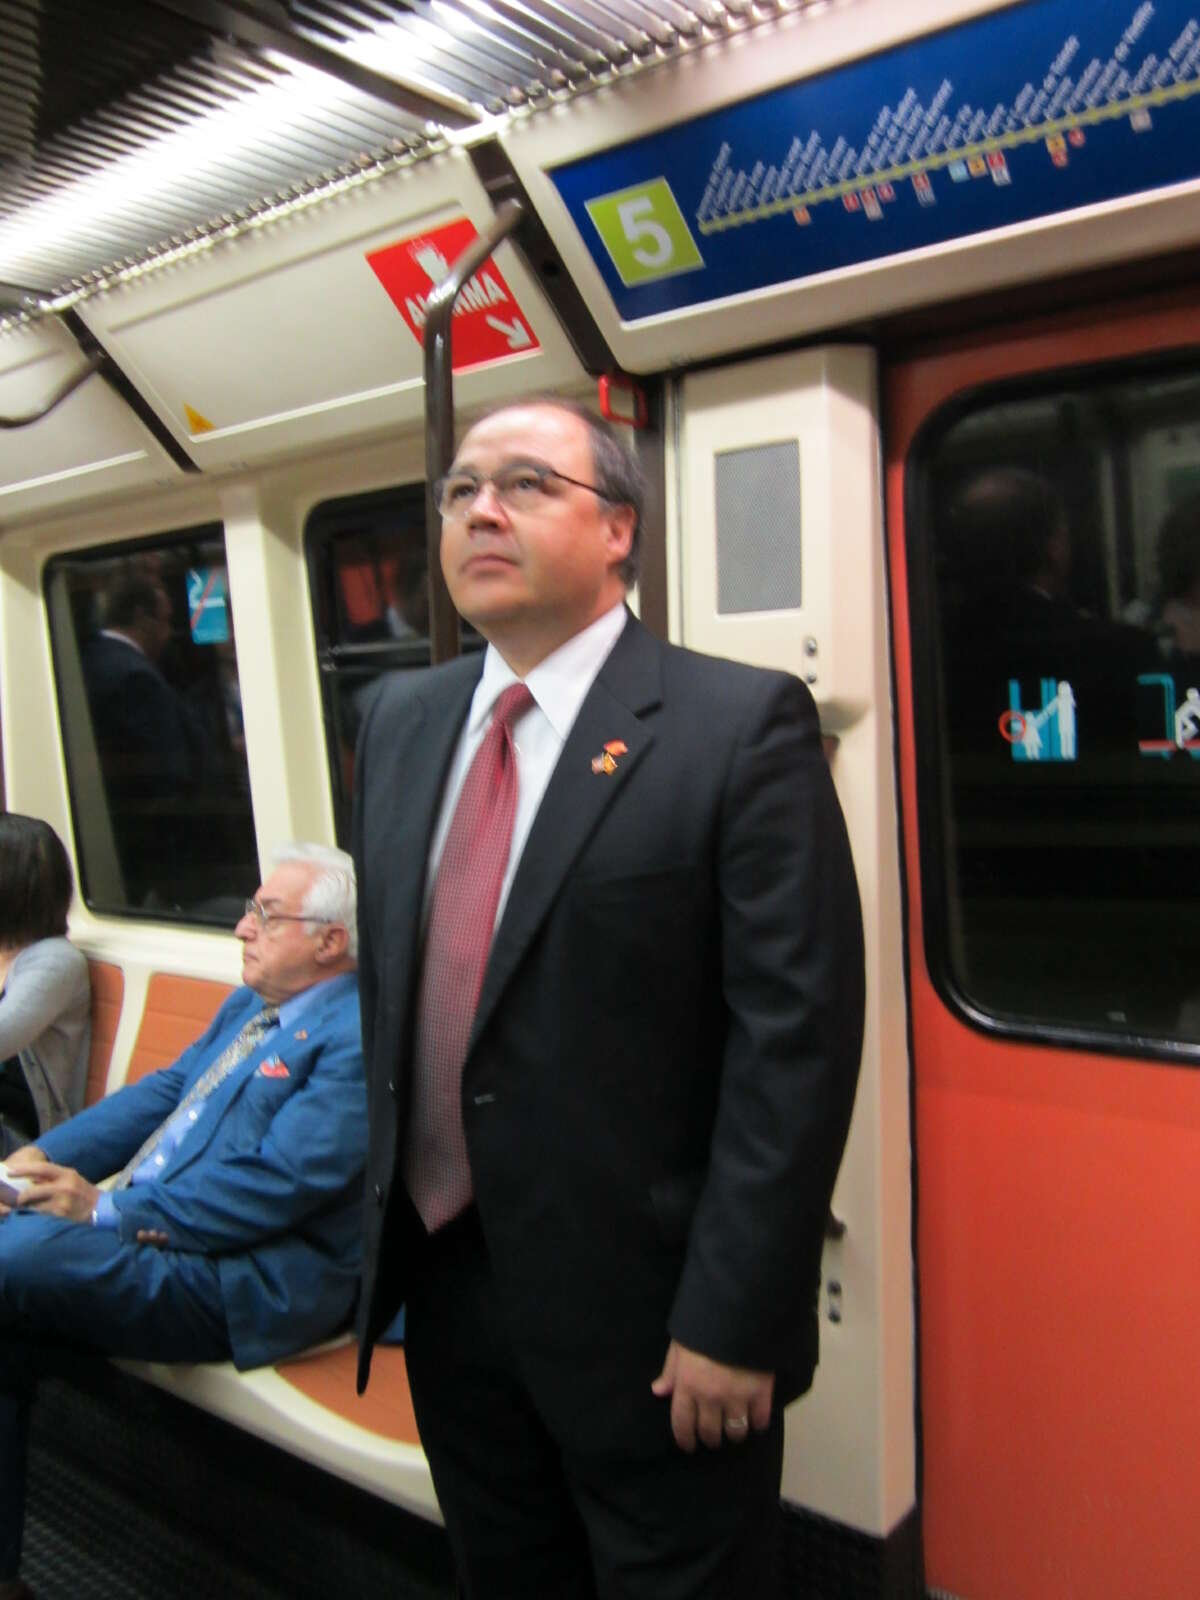 San Antonio Hispanic Chamber of Commerce President and CEO Ramiro Cavazos rides the Madrid subway on Tuesday.